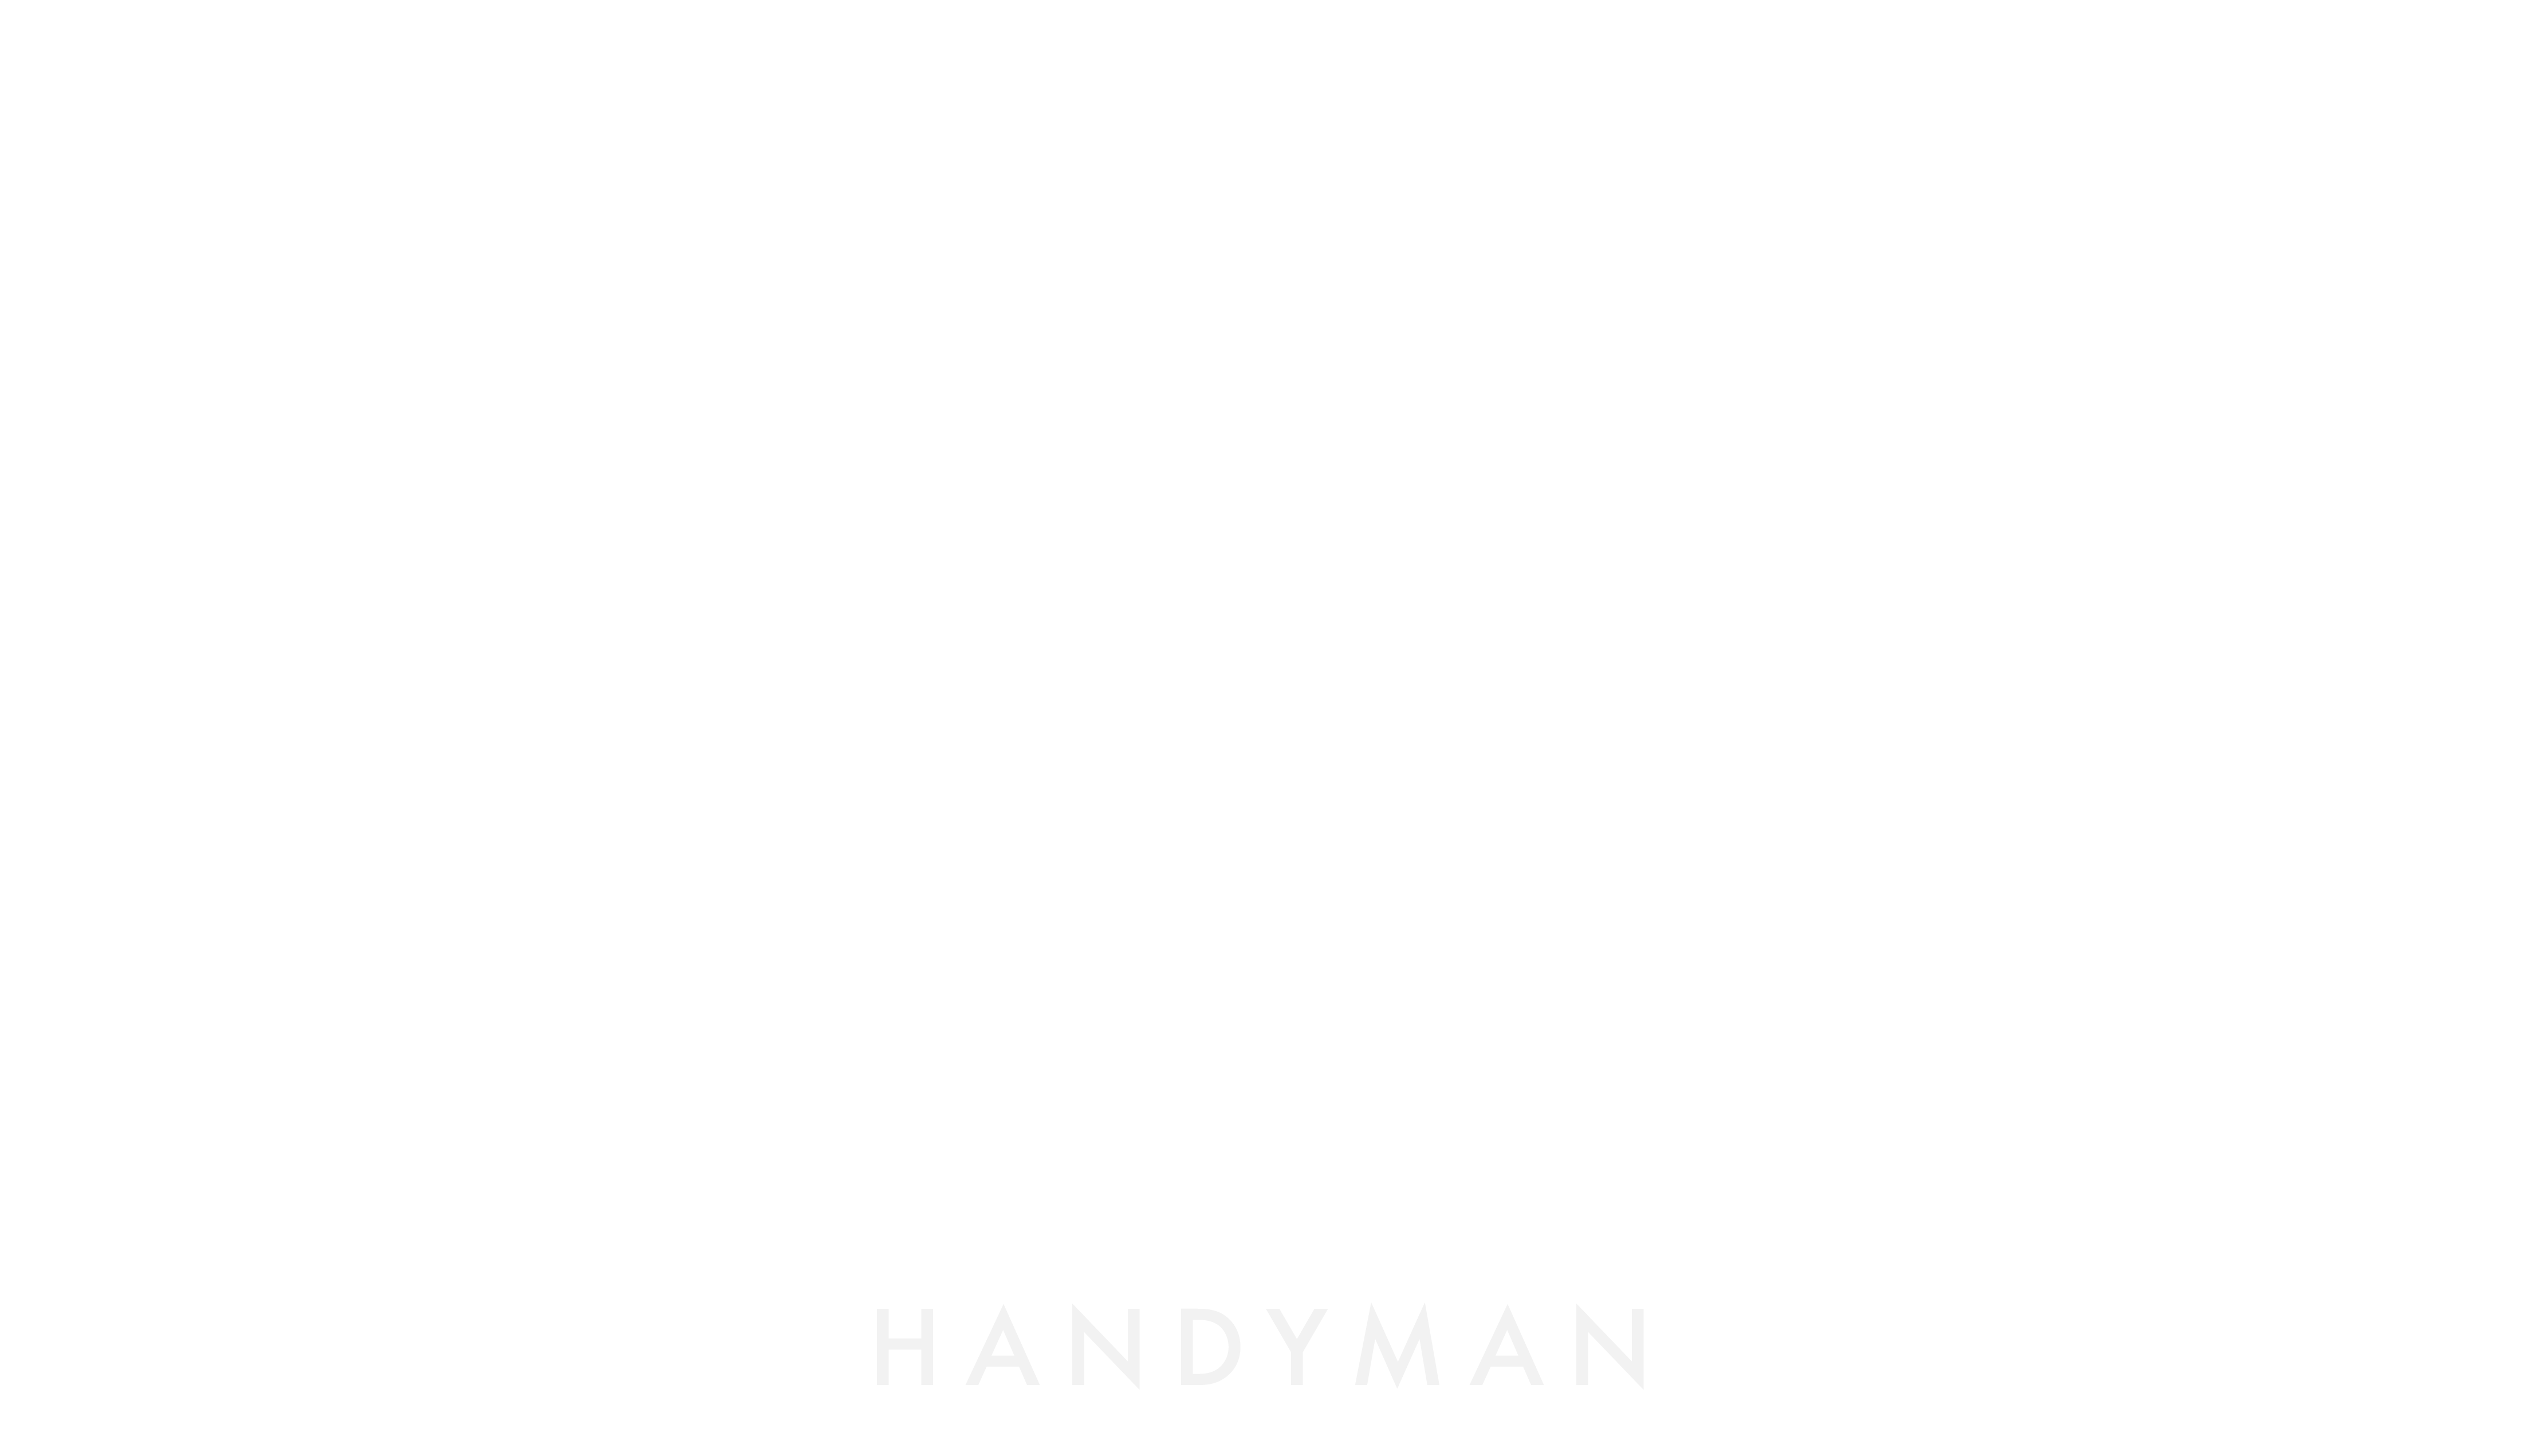 David Edwards Handyman